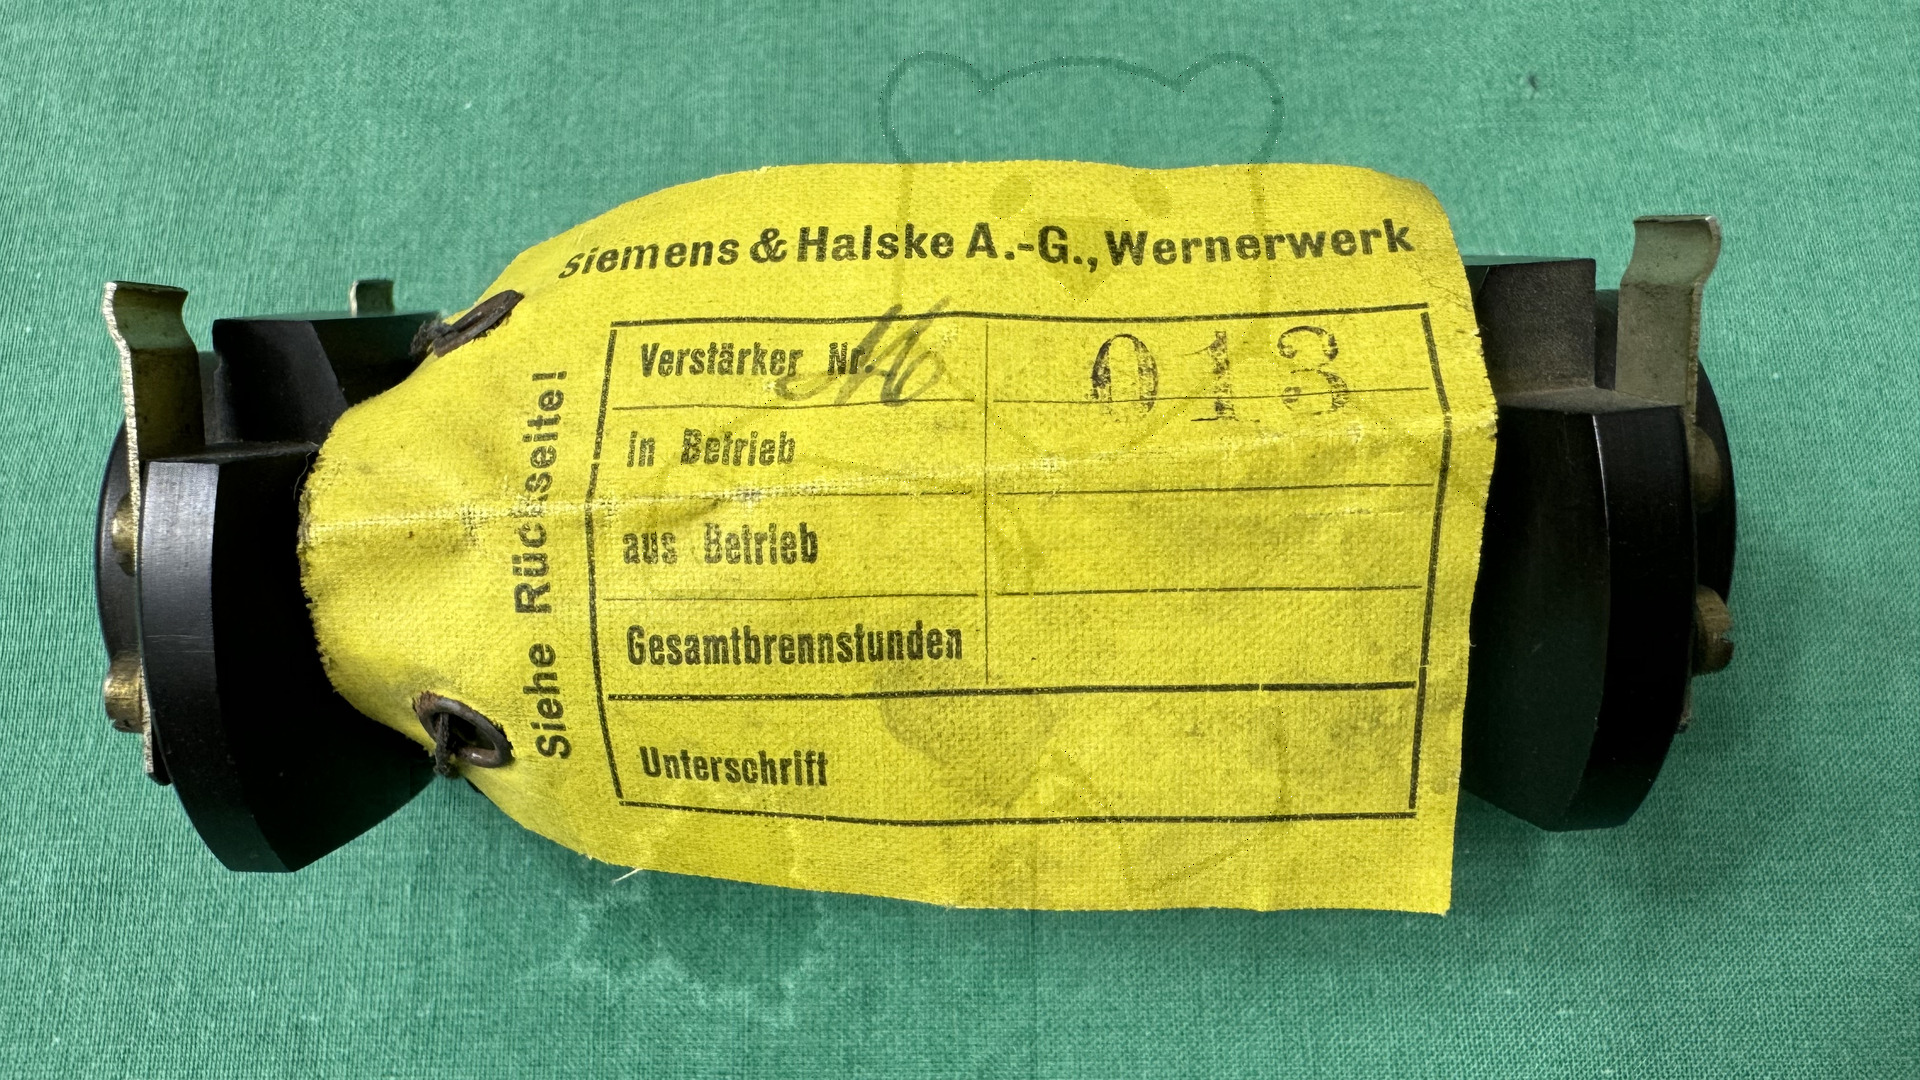 Röhre M Poströhre Siemens #7773 Banderole Vorderseite